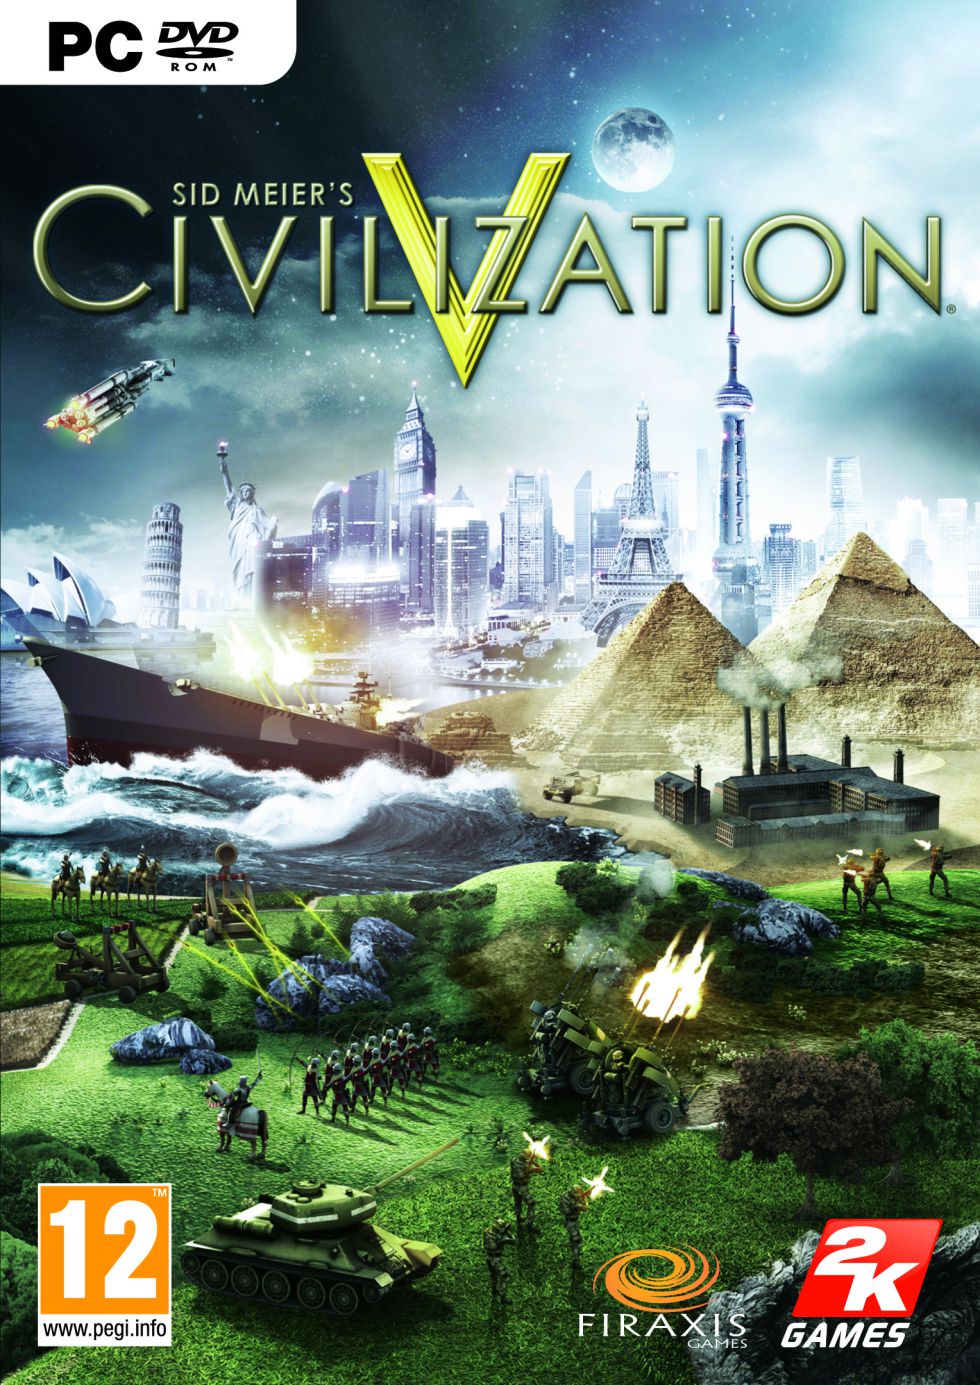 Juega a Sid Meier's Civilization V gratis en Steam